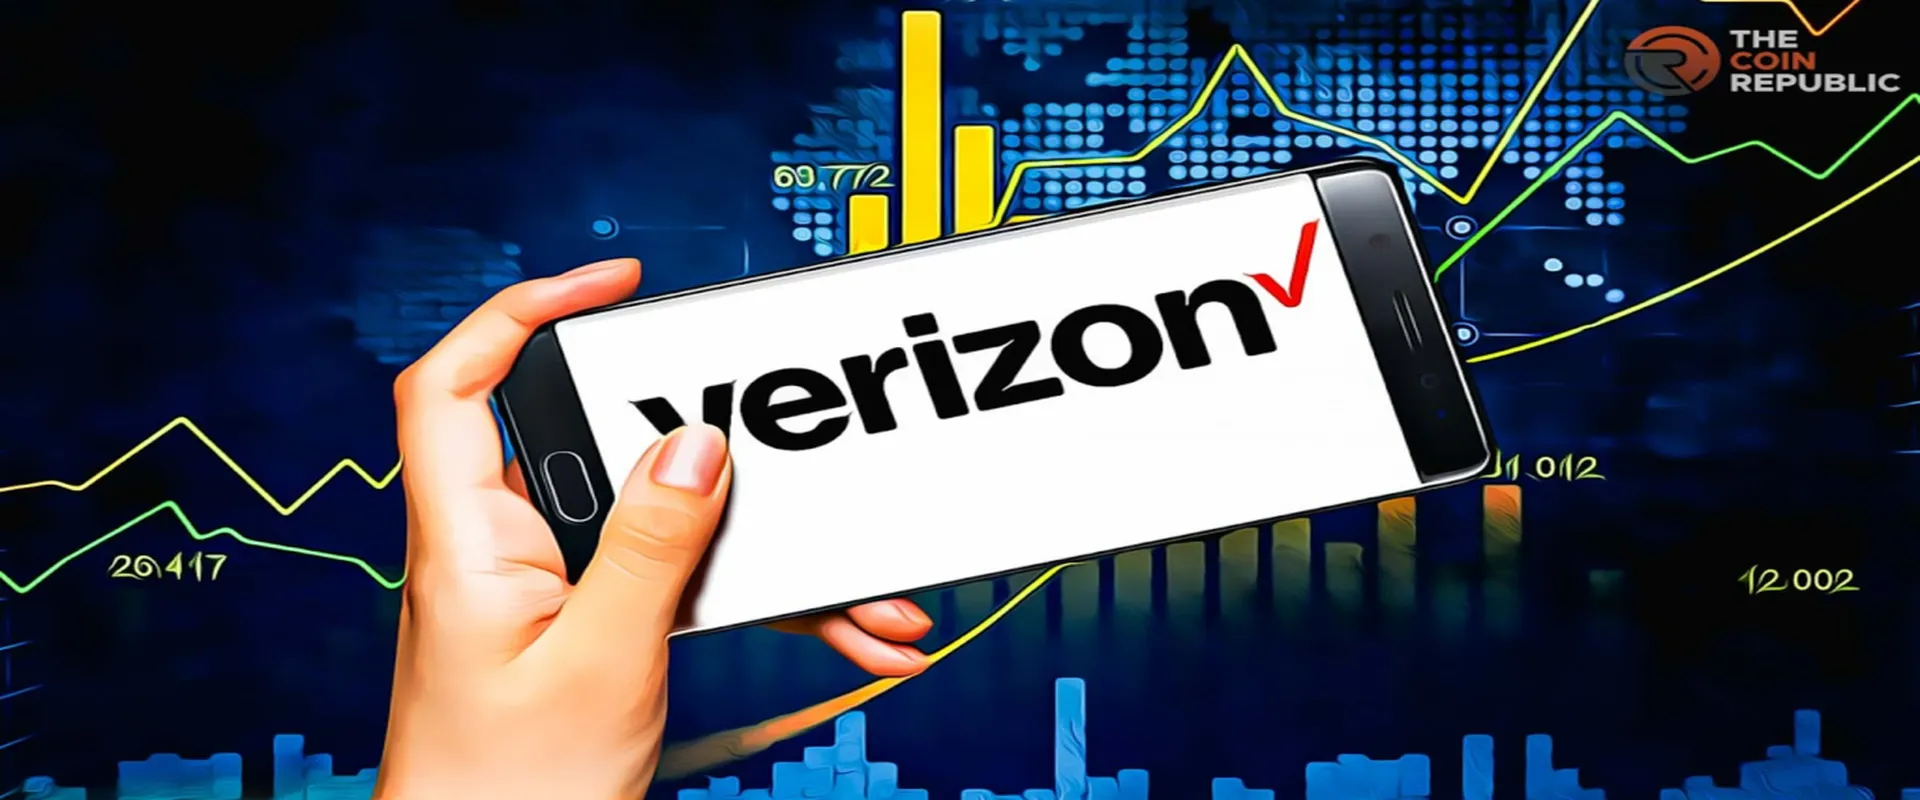 ($VZ) Verizon Stock Following Bearish Trend After its Q1 Results 